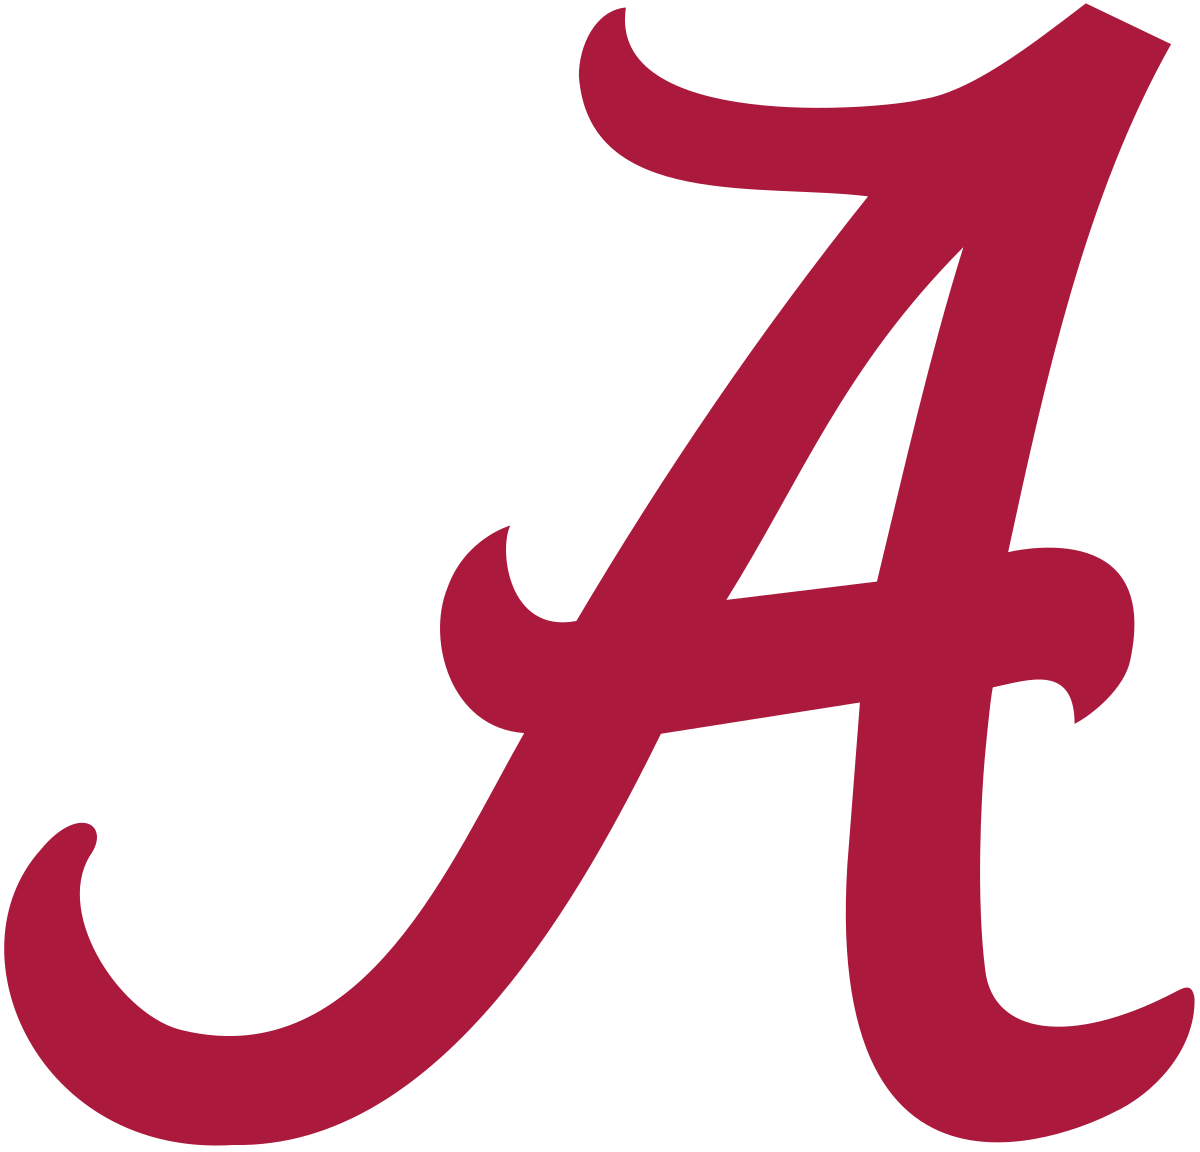 Alabama Roll Crimson Tide Logo - Alabama Crimson Tide football